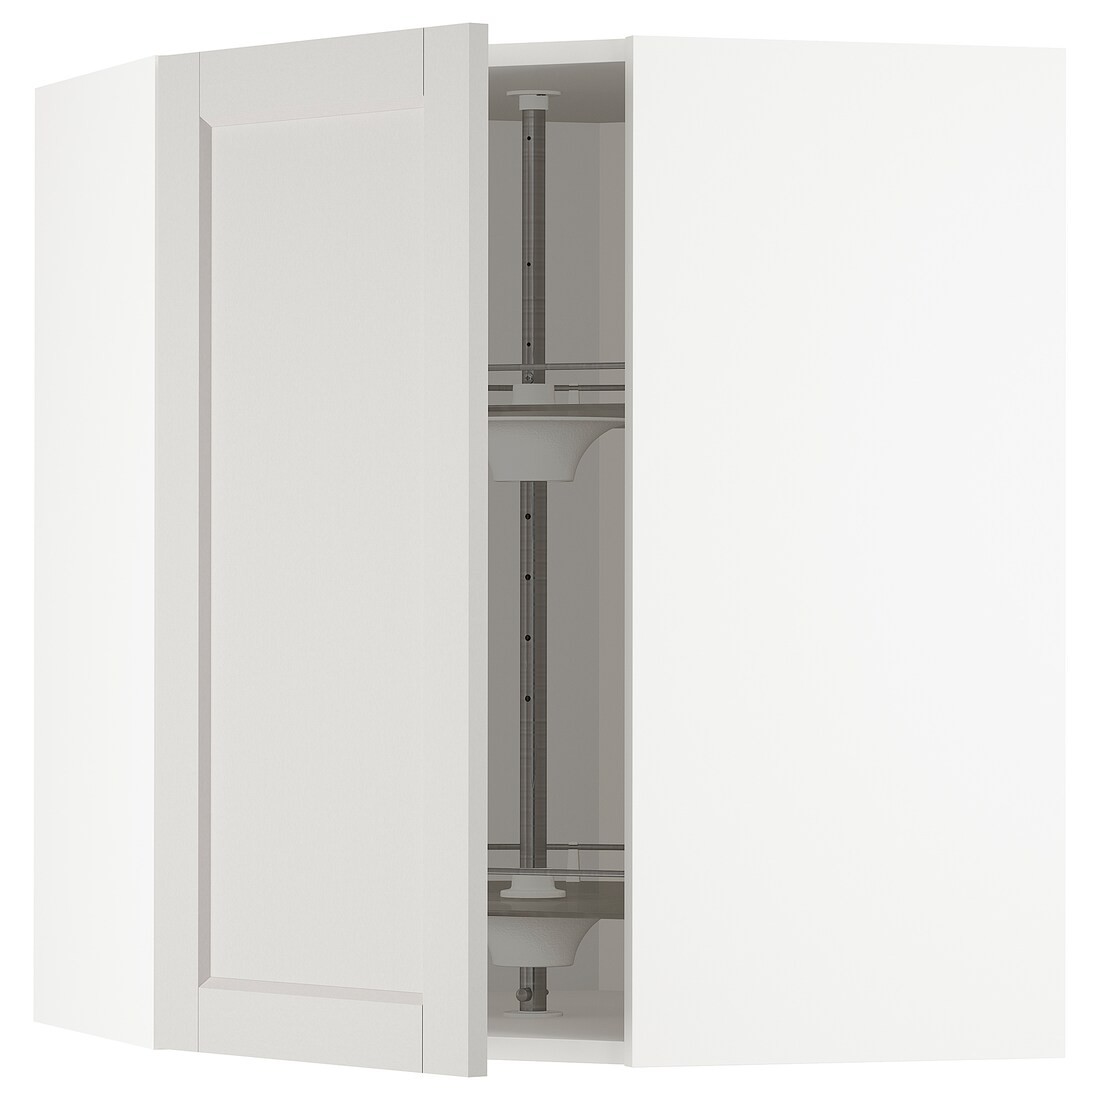 METOD МЕТОД Угловой навесной шкаф с каруселью, белый / Lerhyttan светло-серый, 68x80 см